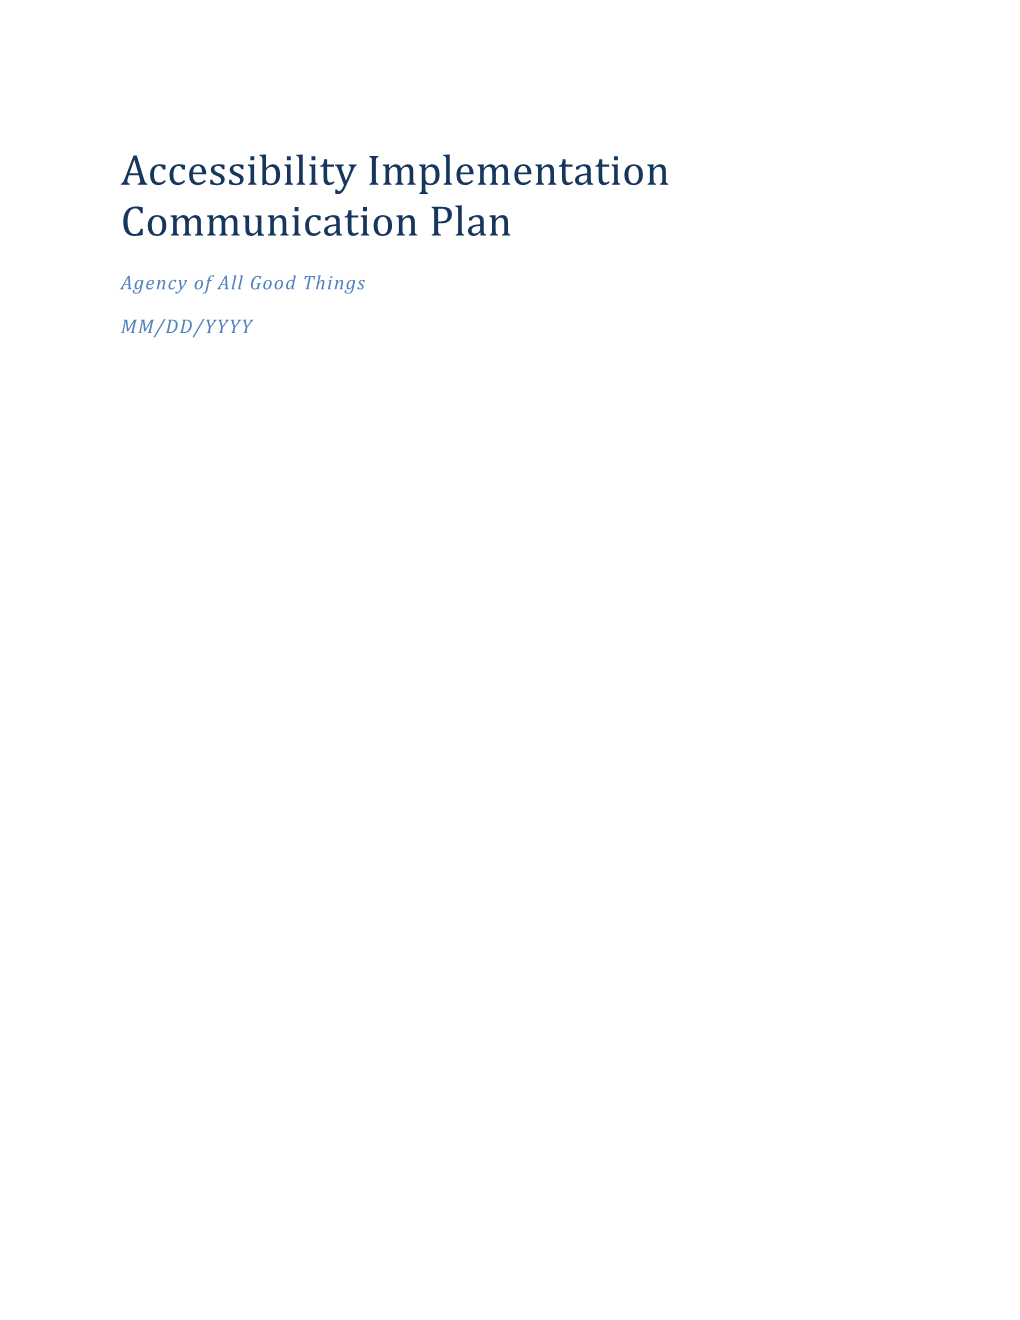 Accessibility Implementation Communication Plan